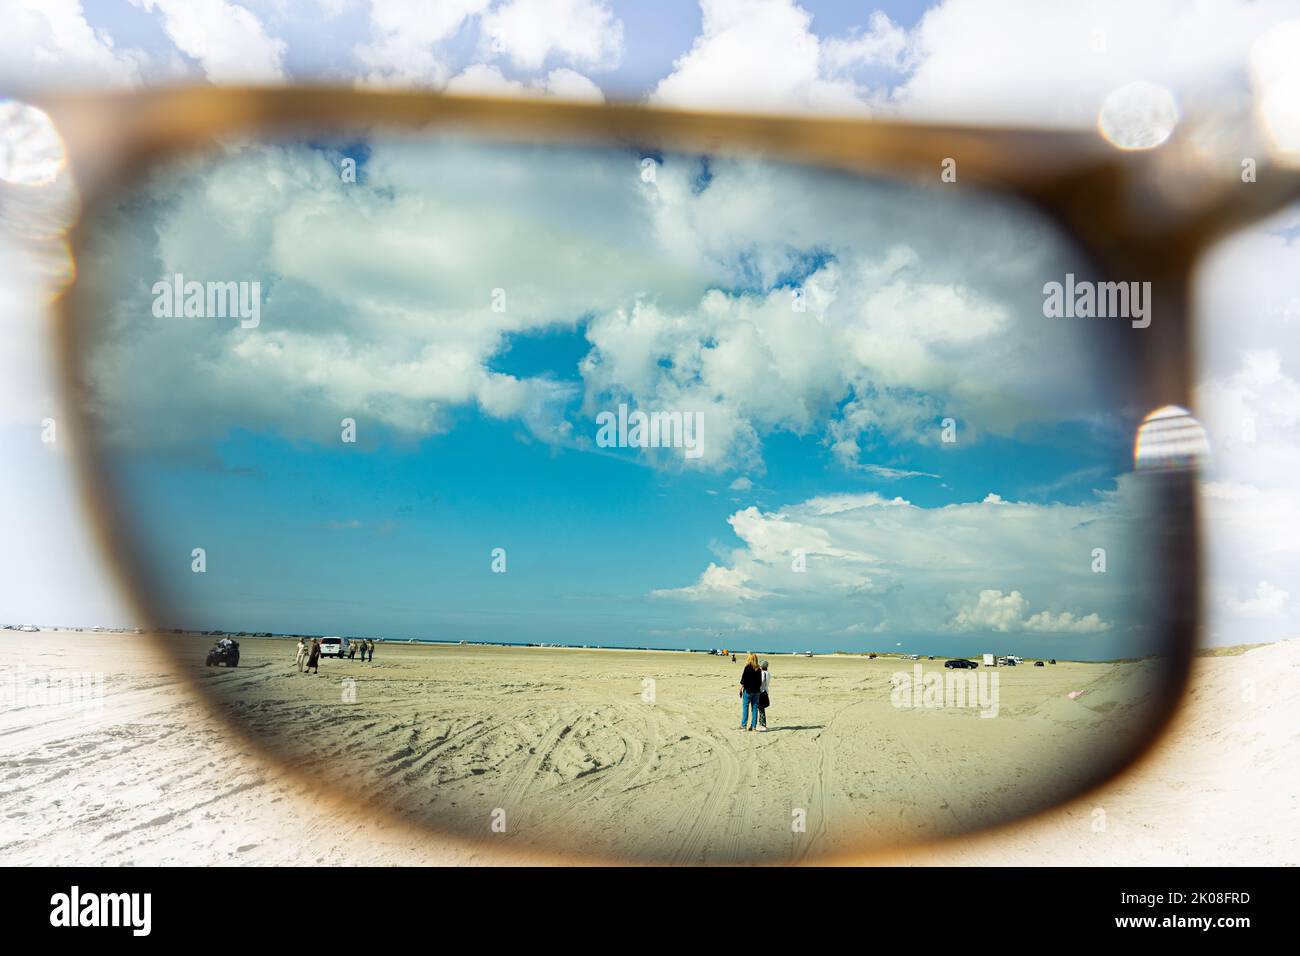 Looking at the beach on Rømø island through polarizing sunglasses Stock Photo